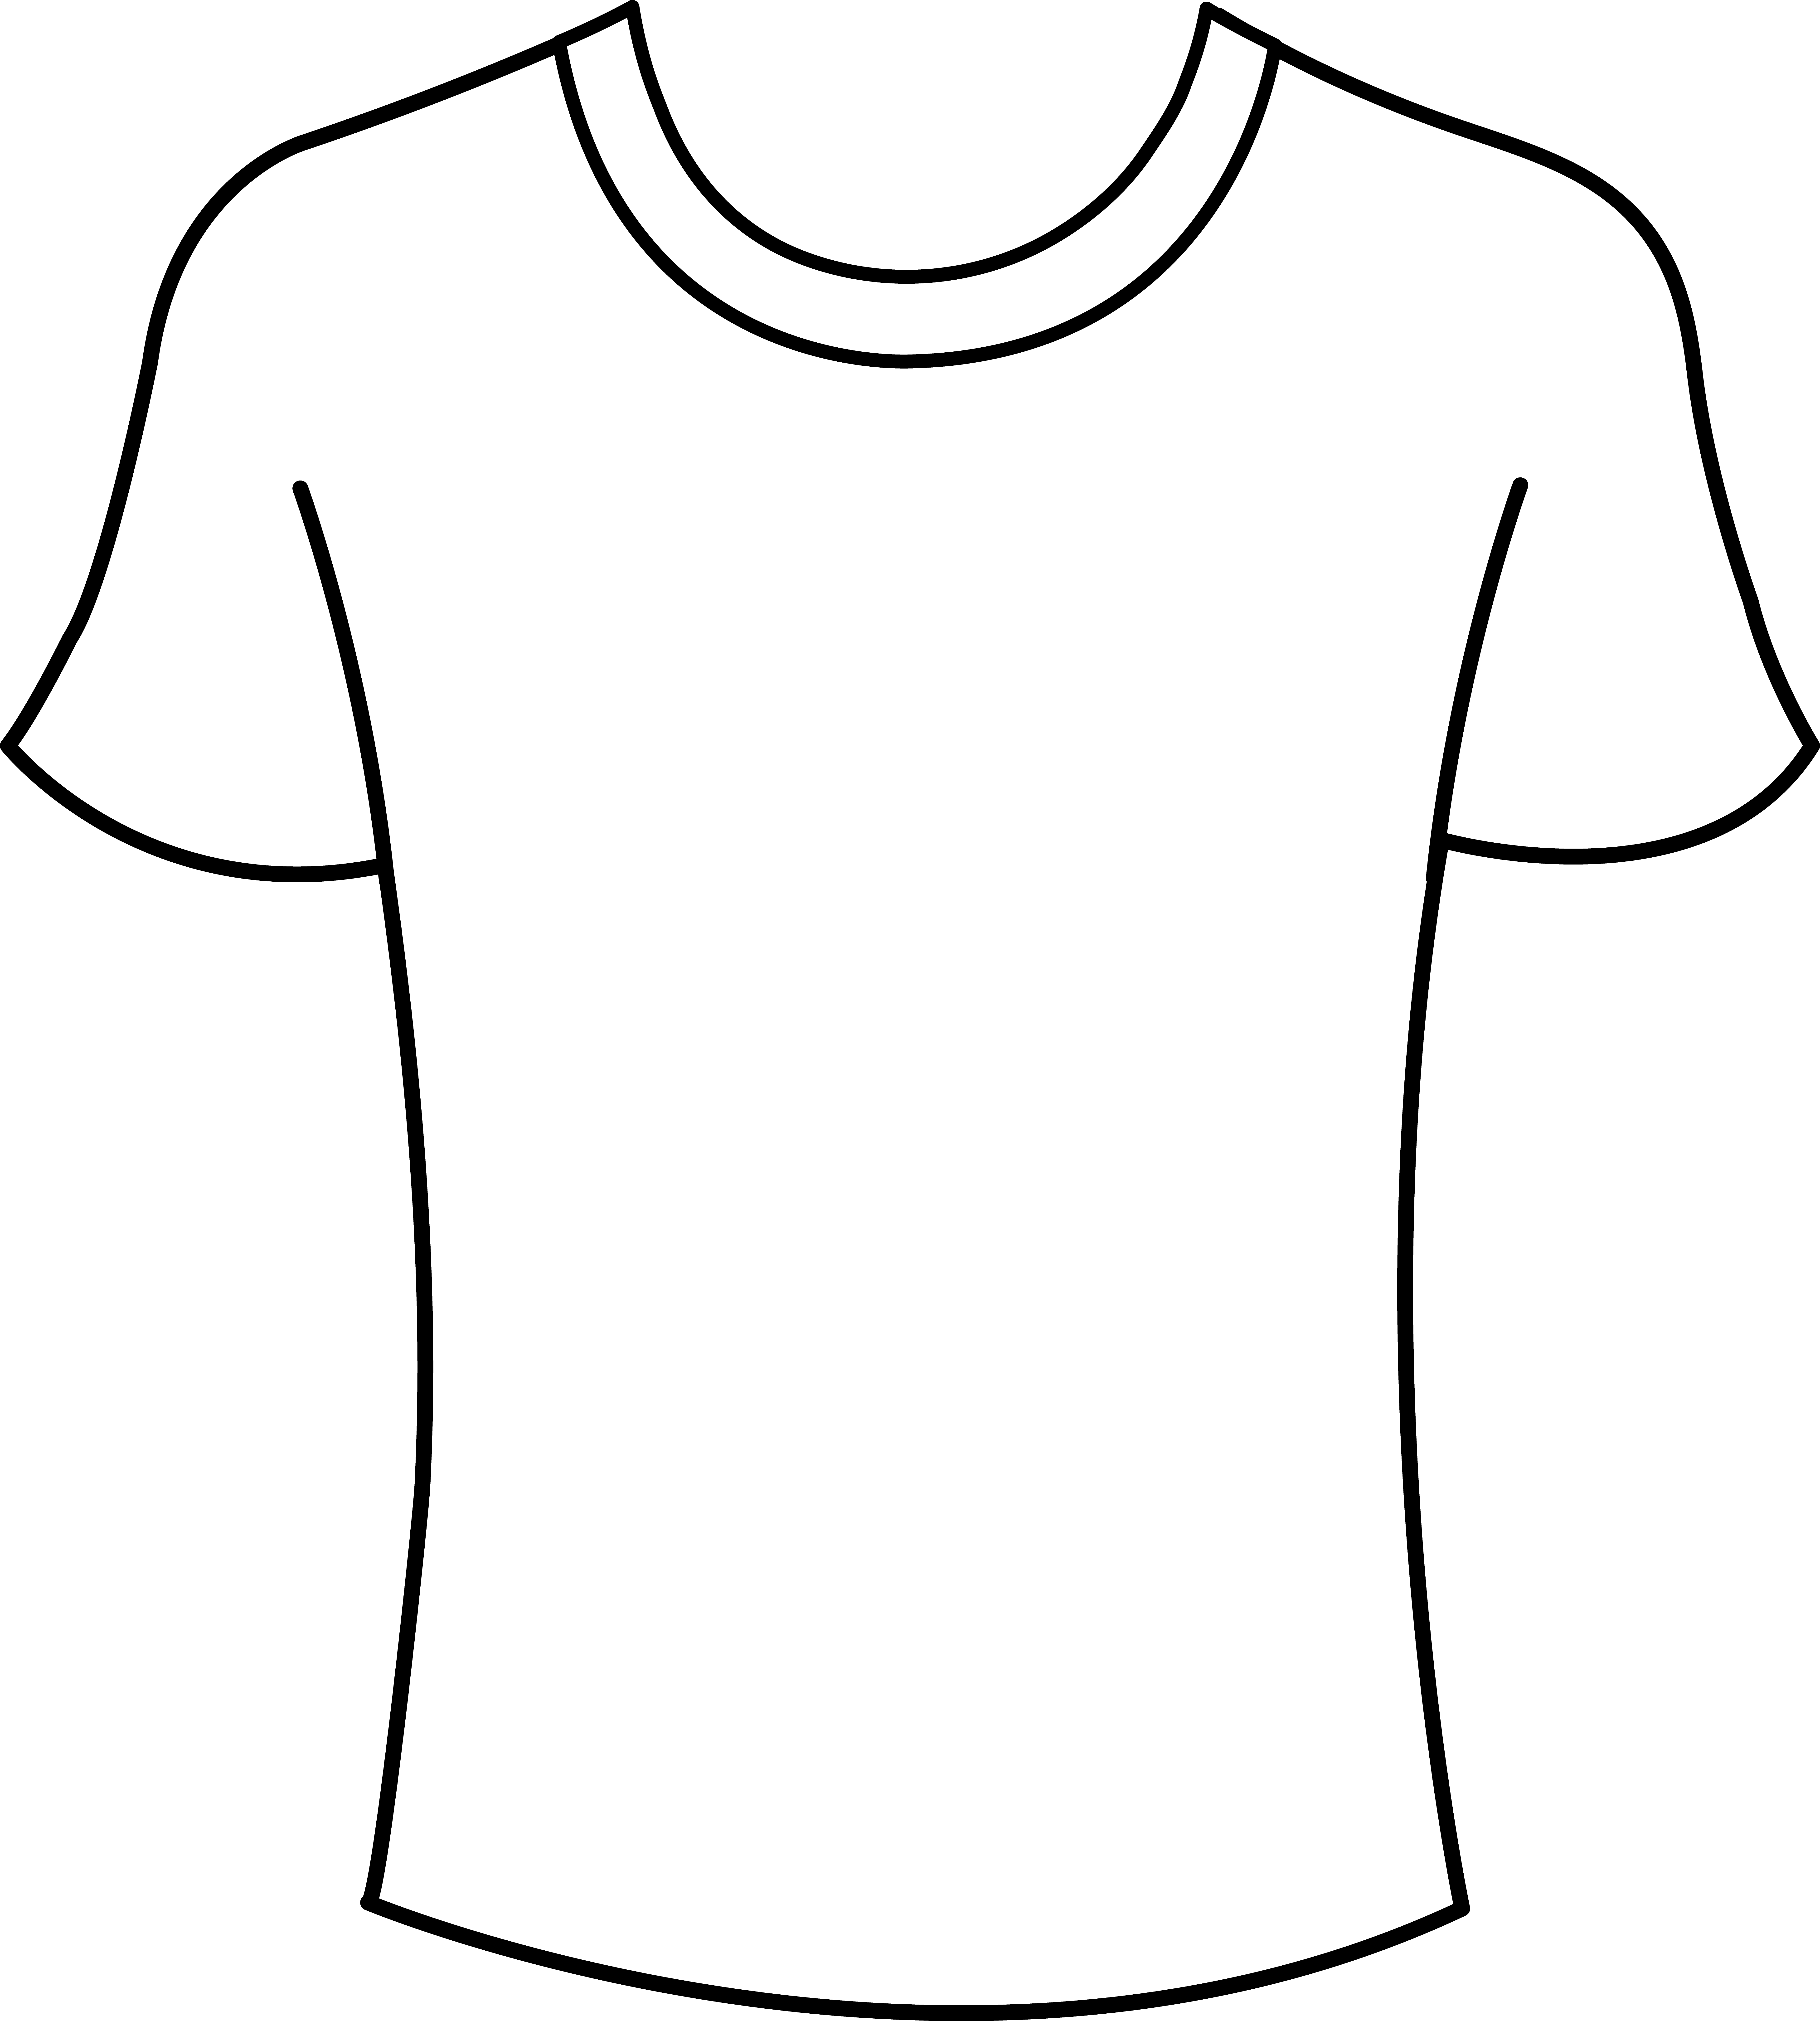 Tshirt PNG Outline Transparent Tshirt Outline.PNG Images. PlusPNG